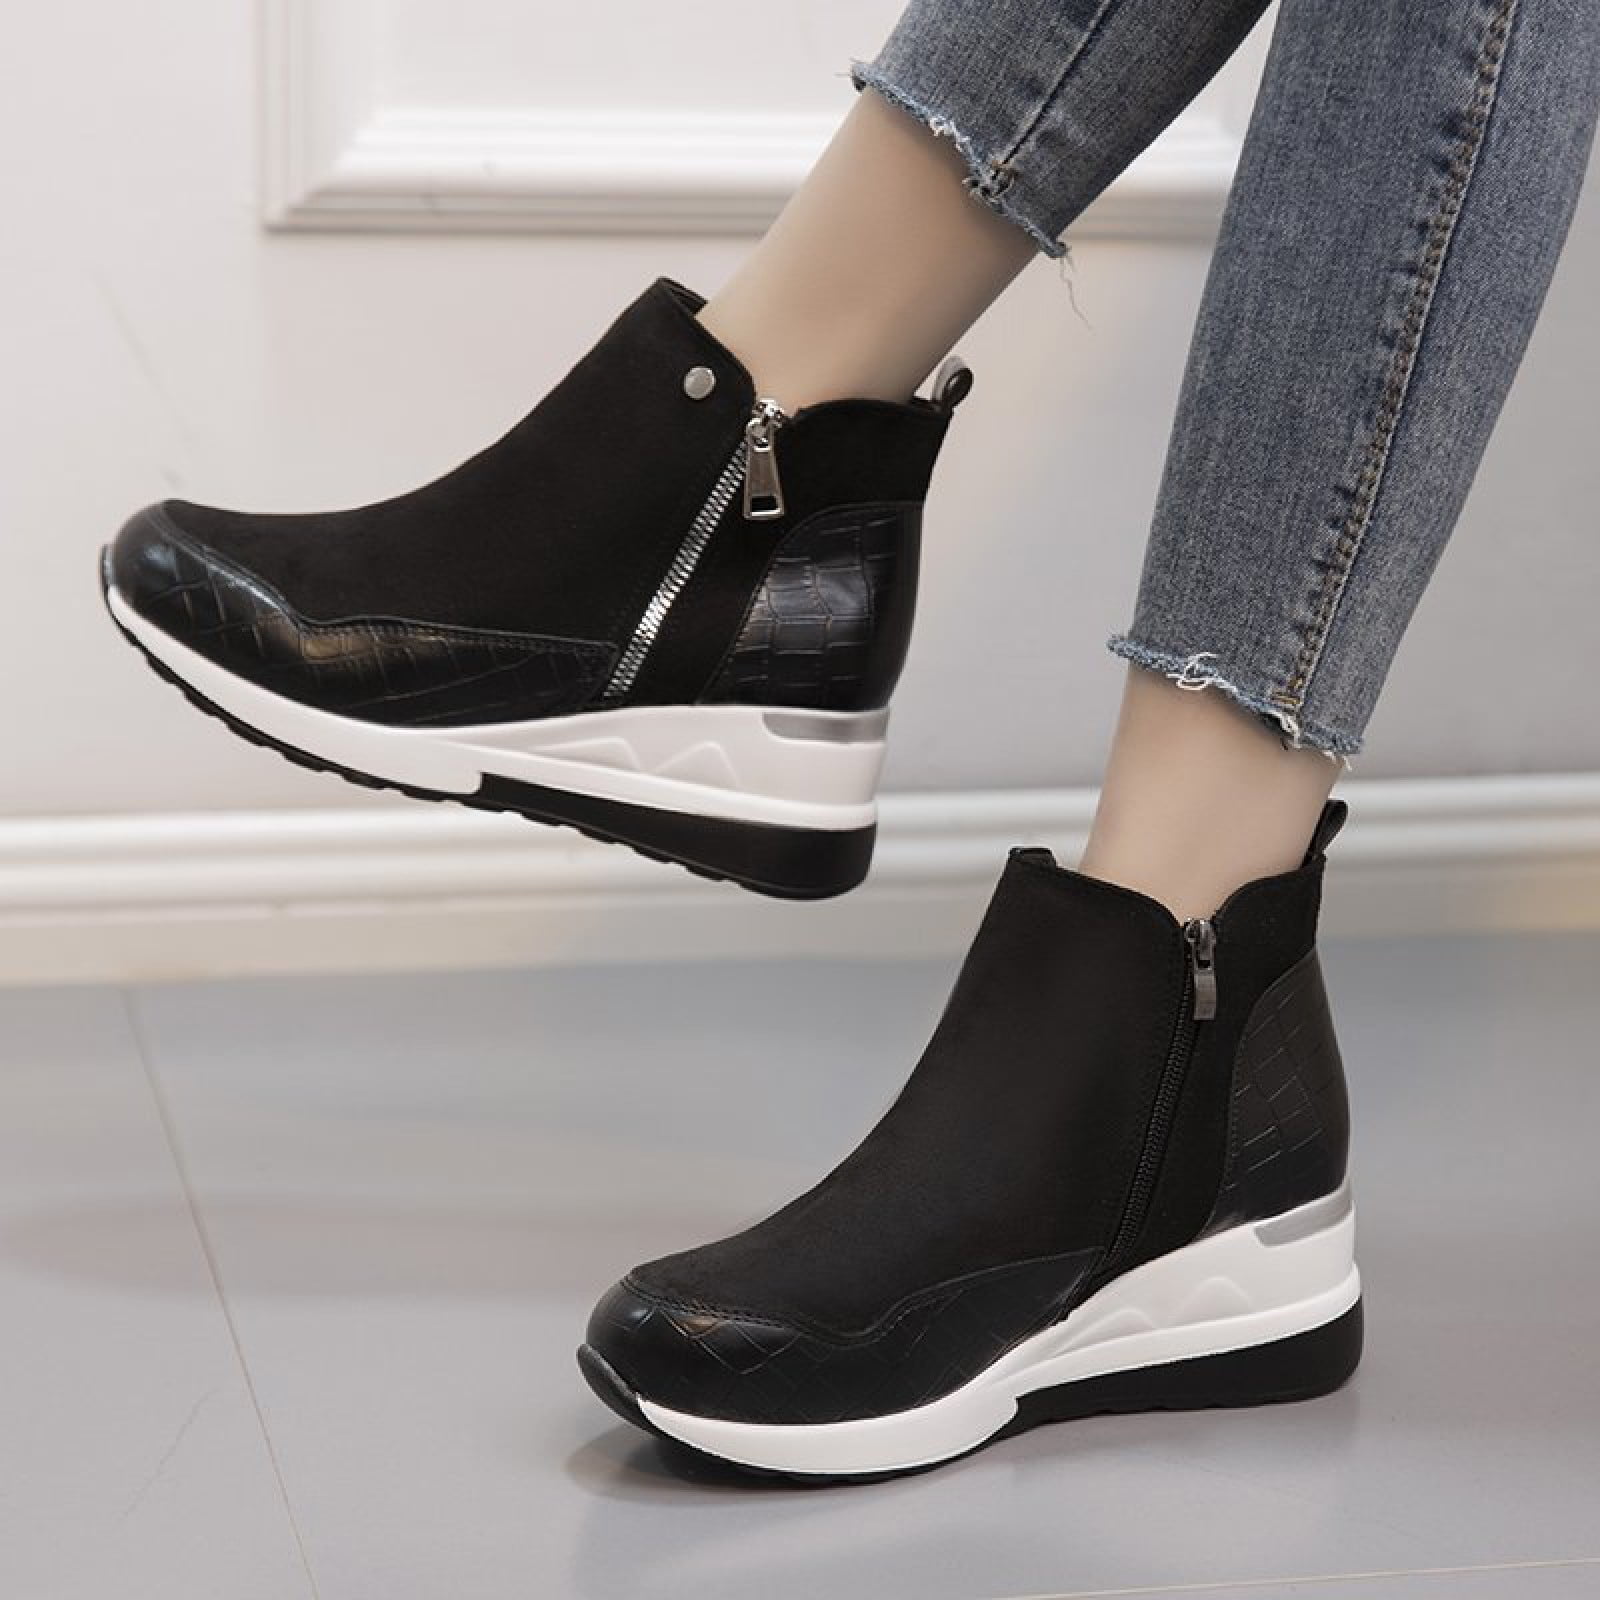 Zpanxa Shoes for Ankle Plus Size Platform Casual Wedges Sneakers Zip Short Boots Black Womens 43 - Walmart.com